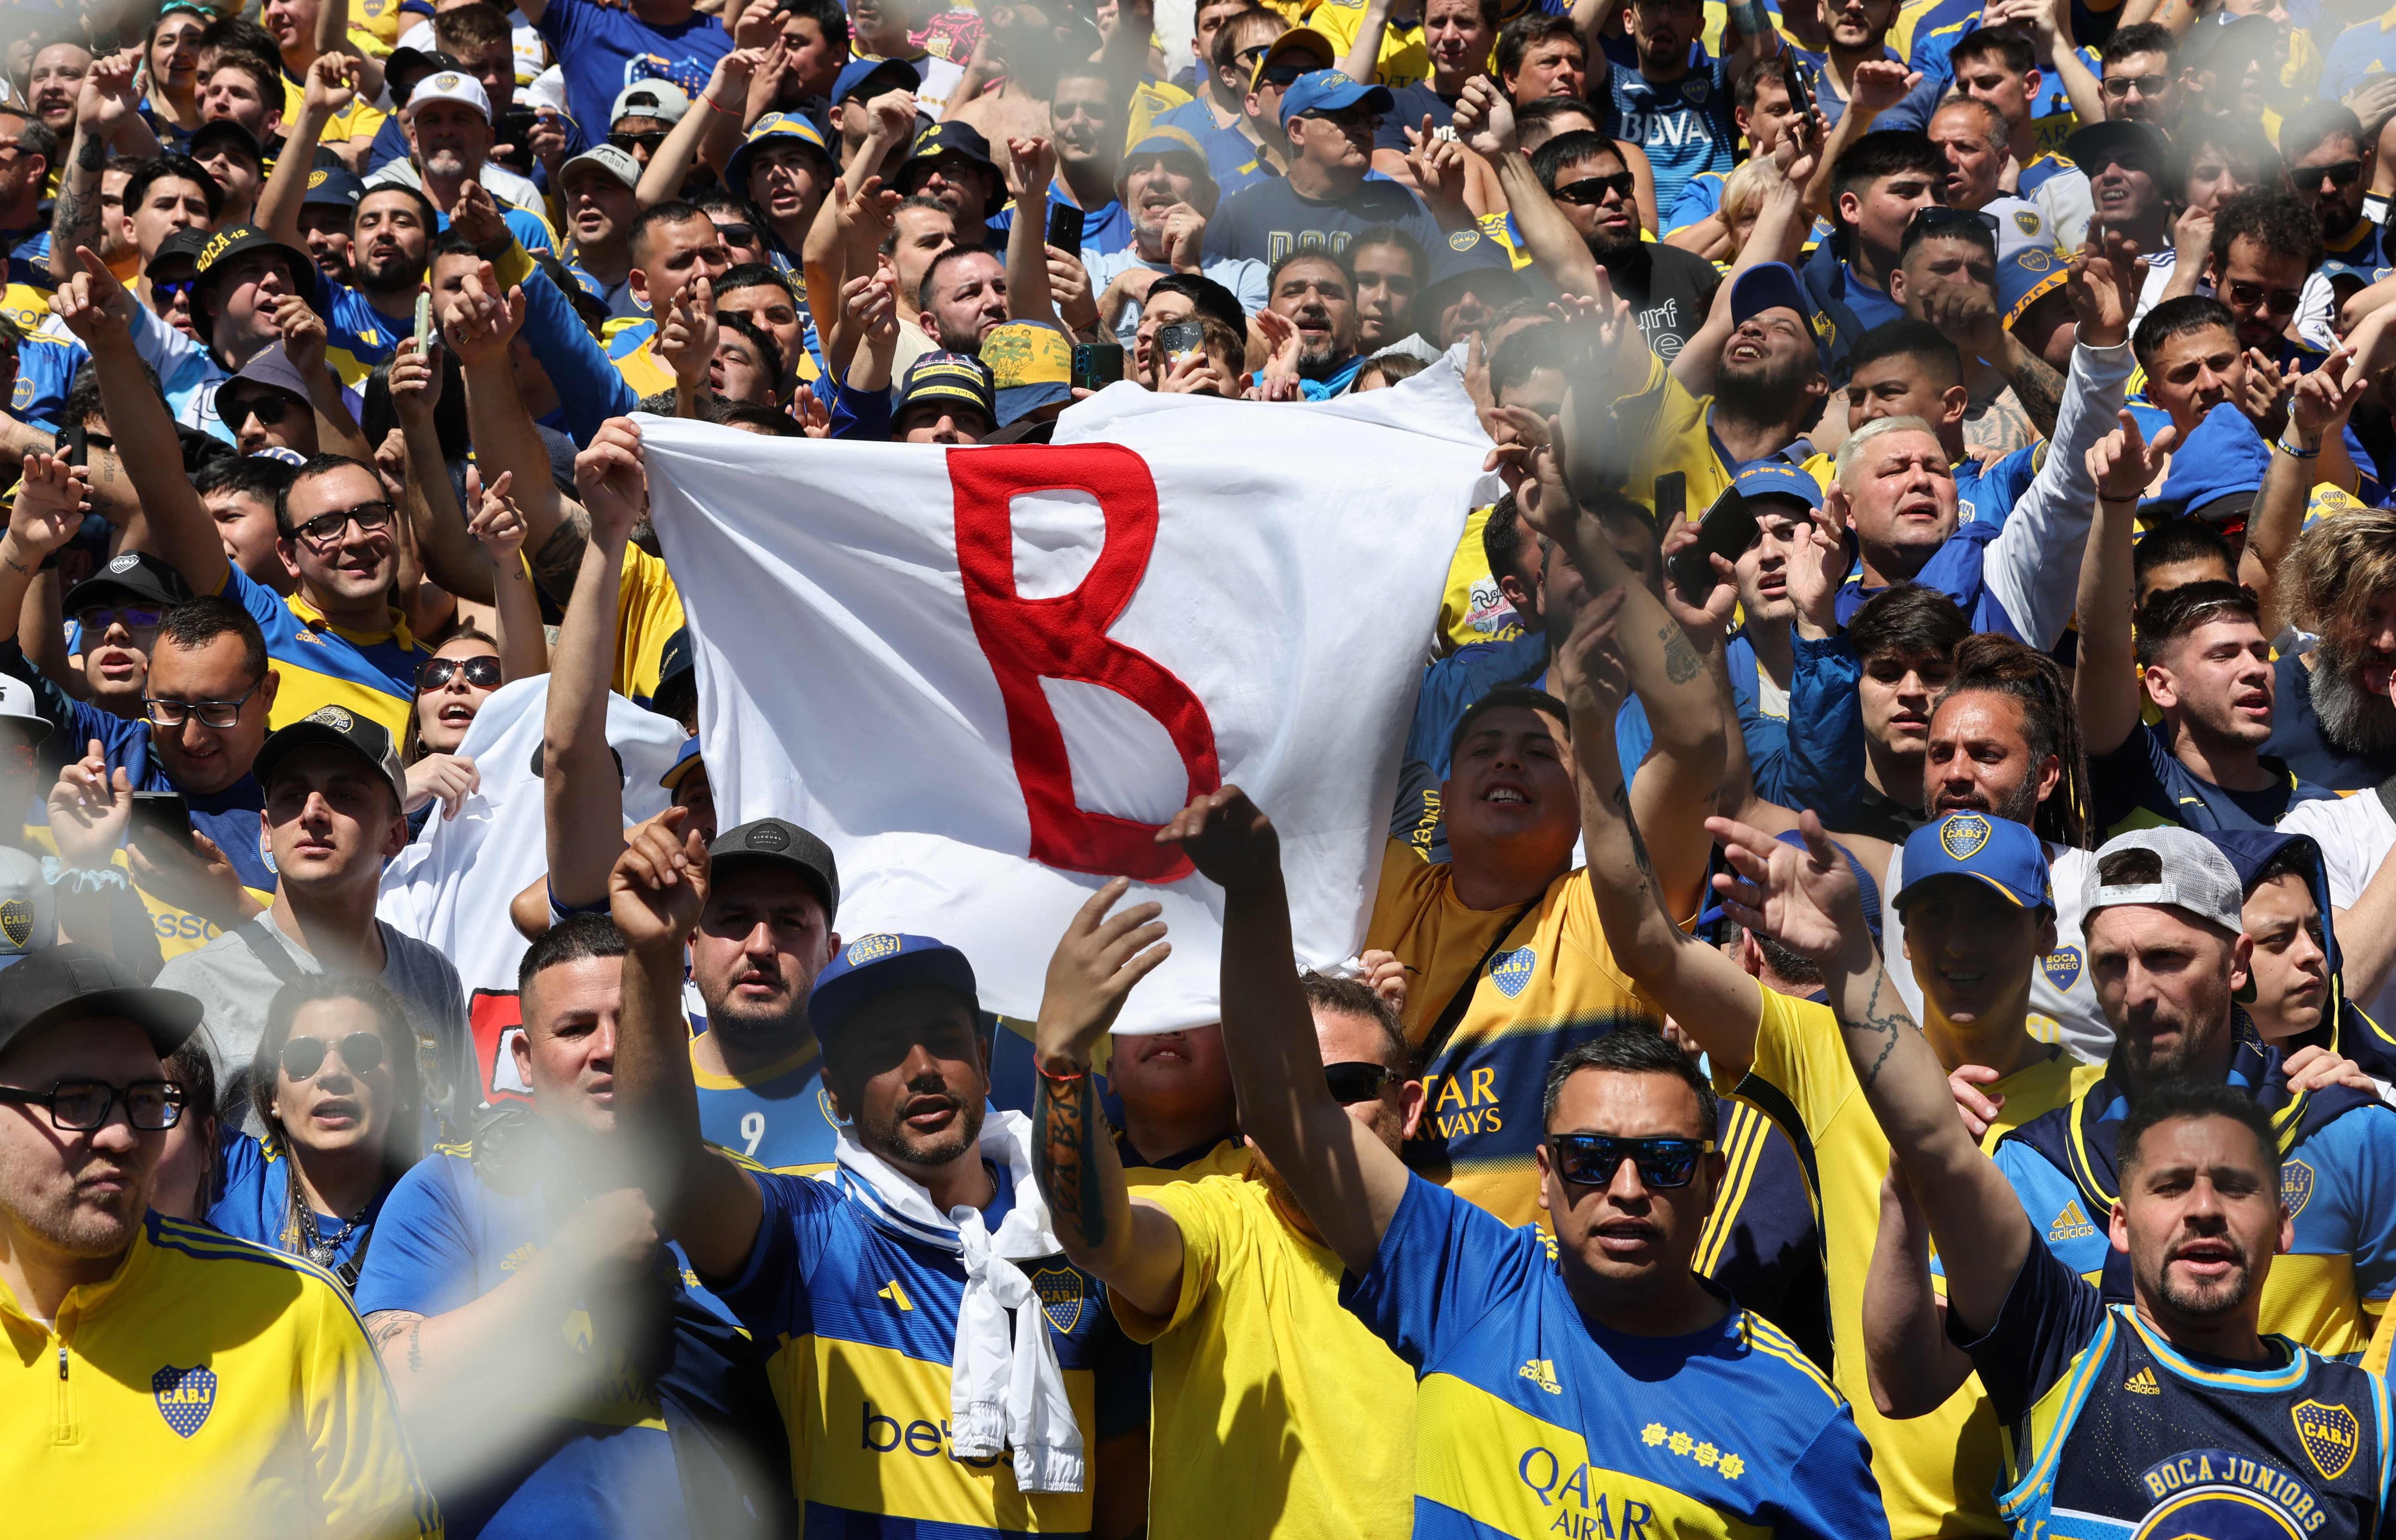 Supporters of Boca Juniors 